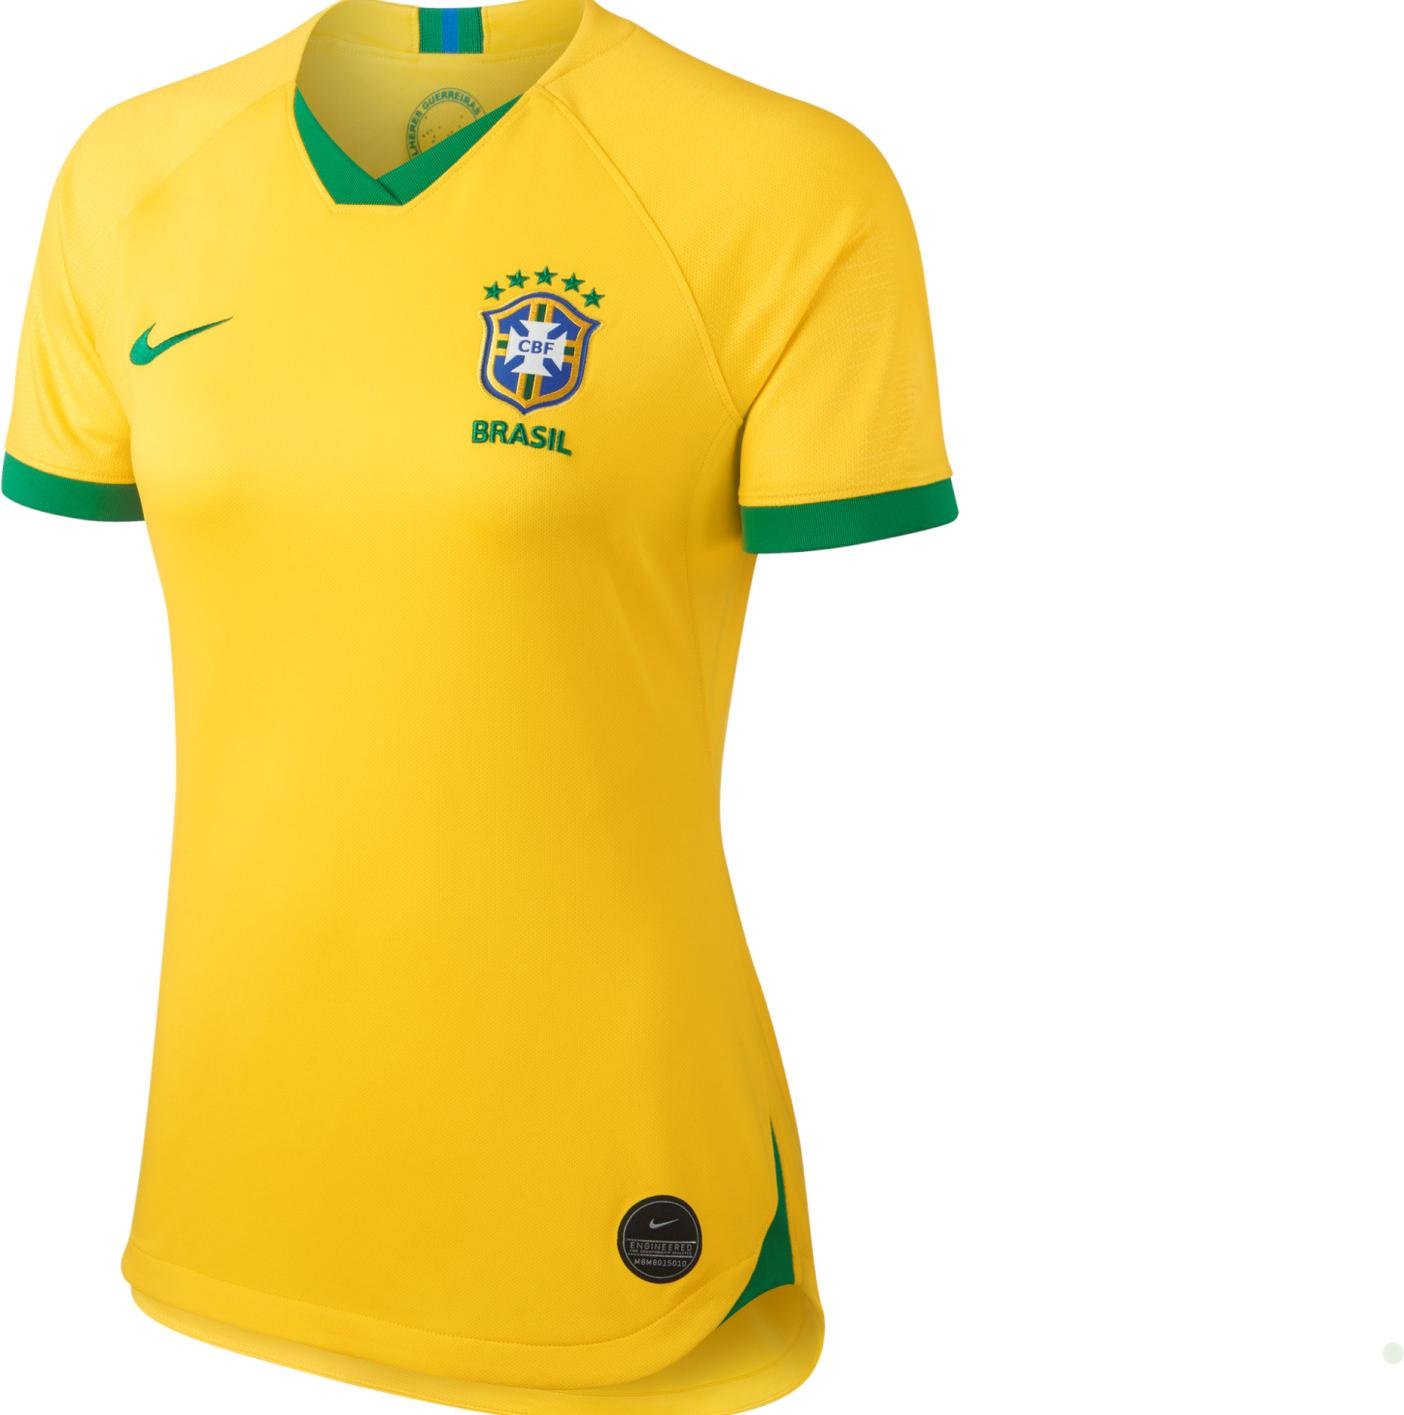 Apariencia Desviarse Productividad Camiseta Nike Brazil home 2019 W - 11teamsports.es